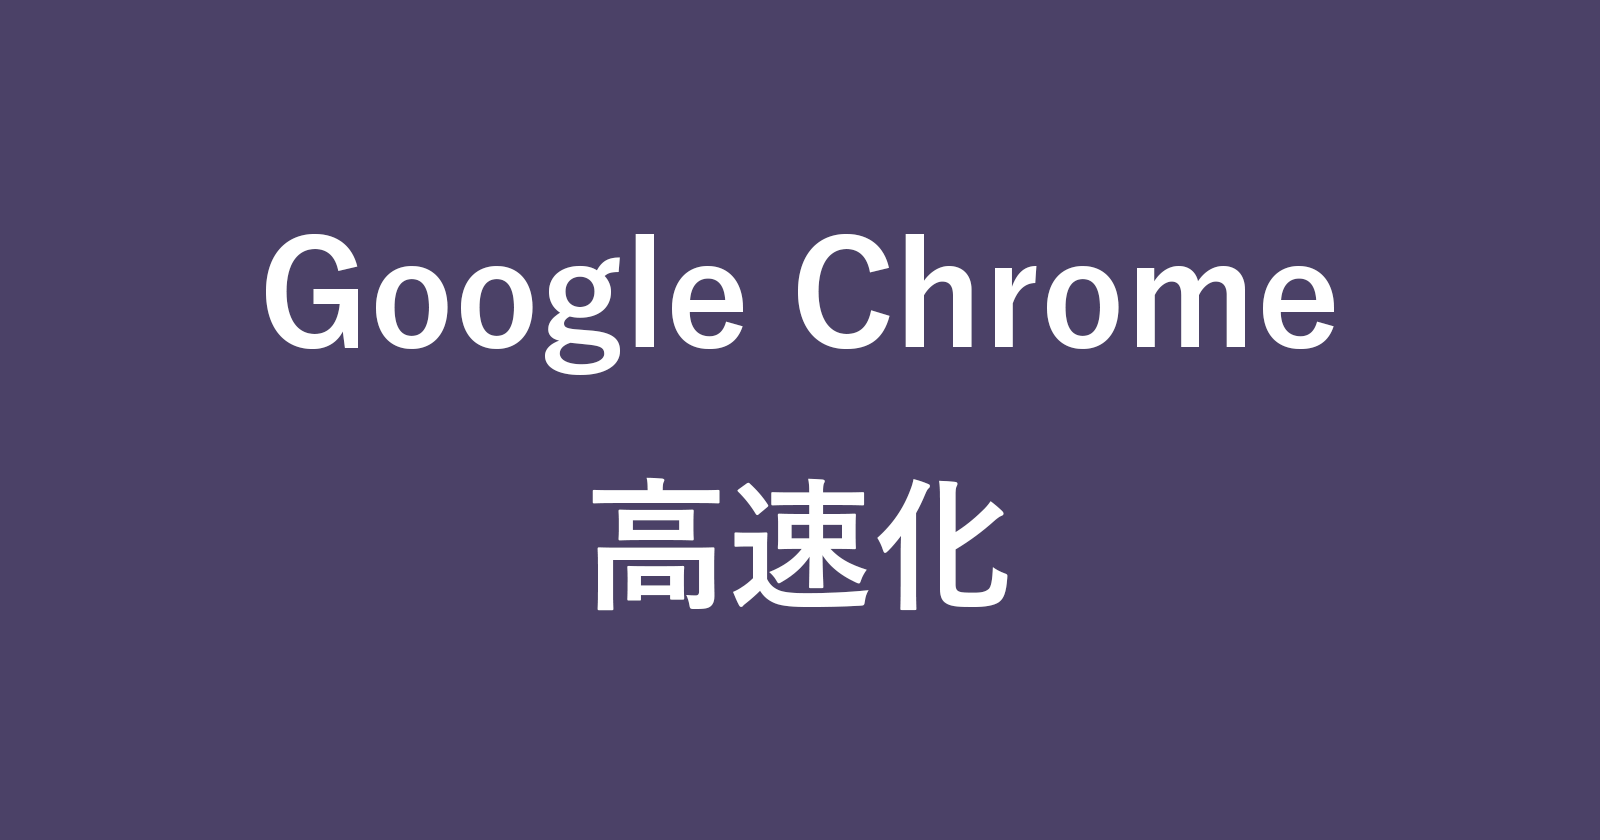 google chrome speed up